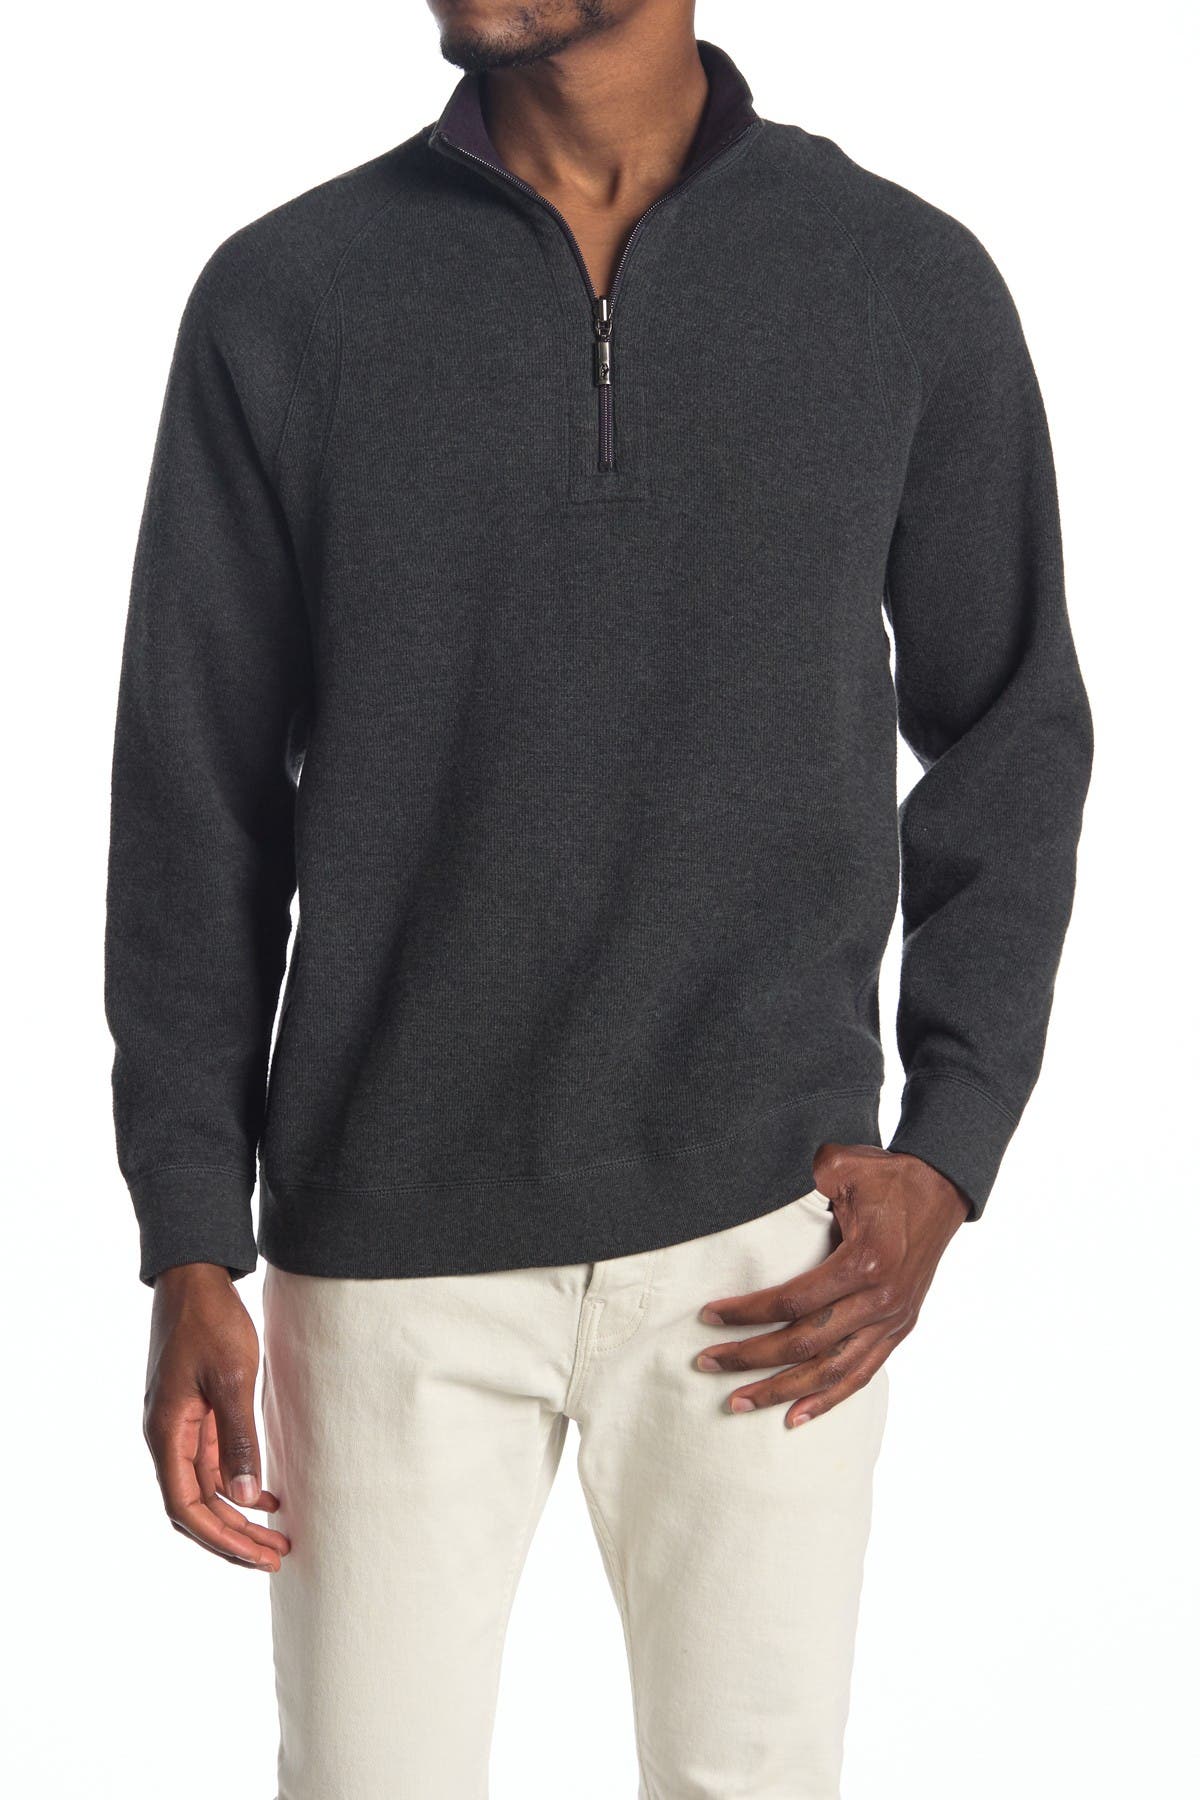 tommy bahama quarter zip sweater